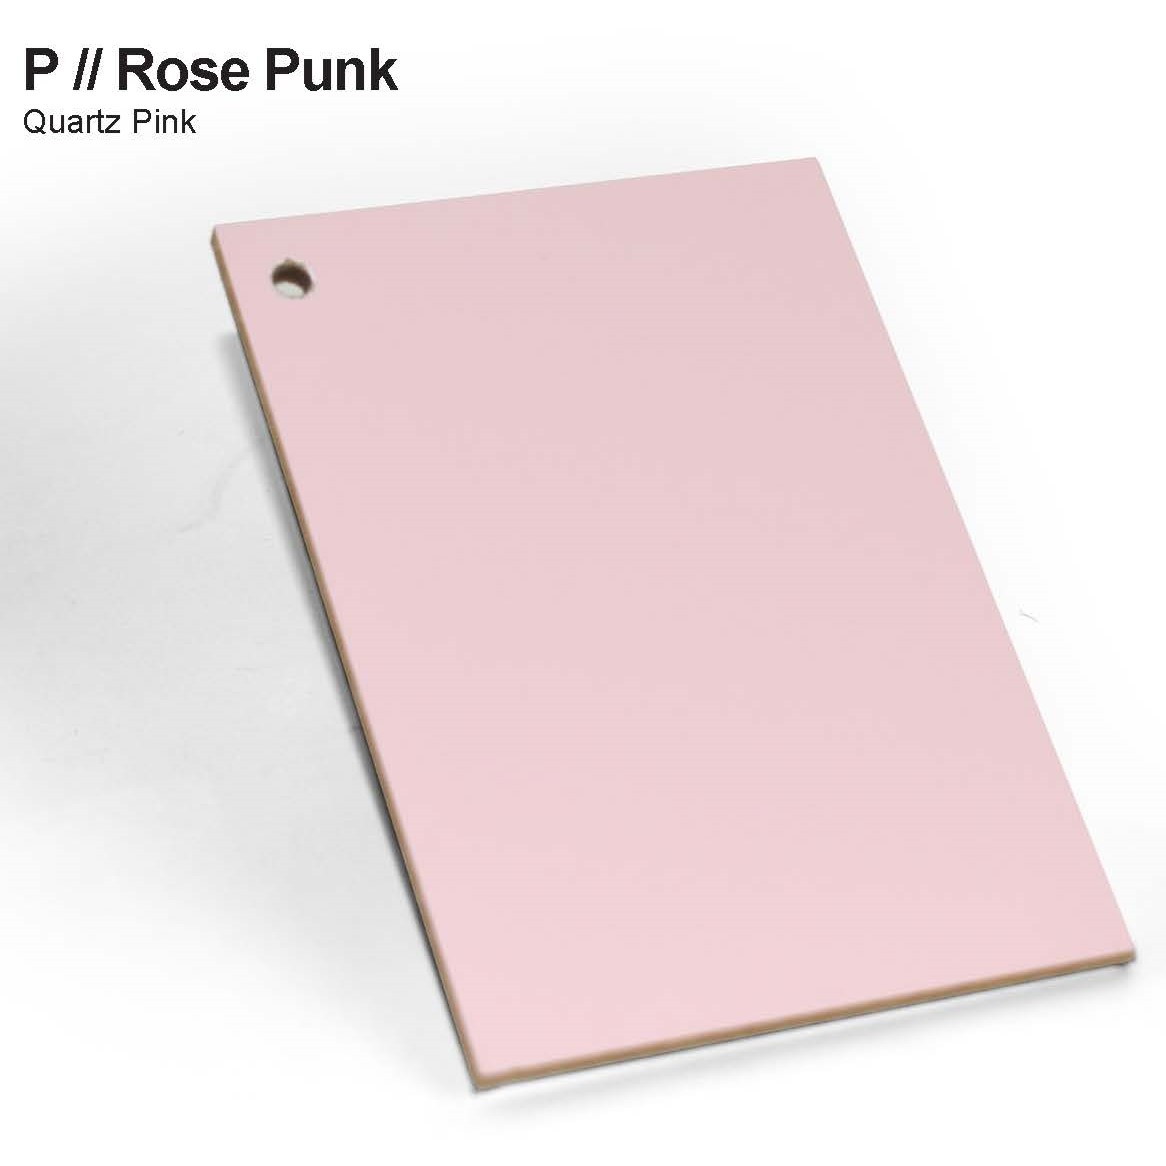 Rose Punk